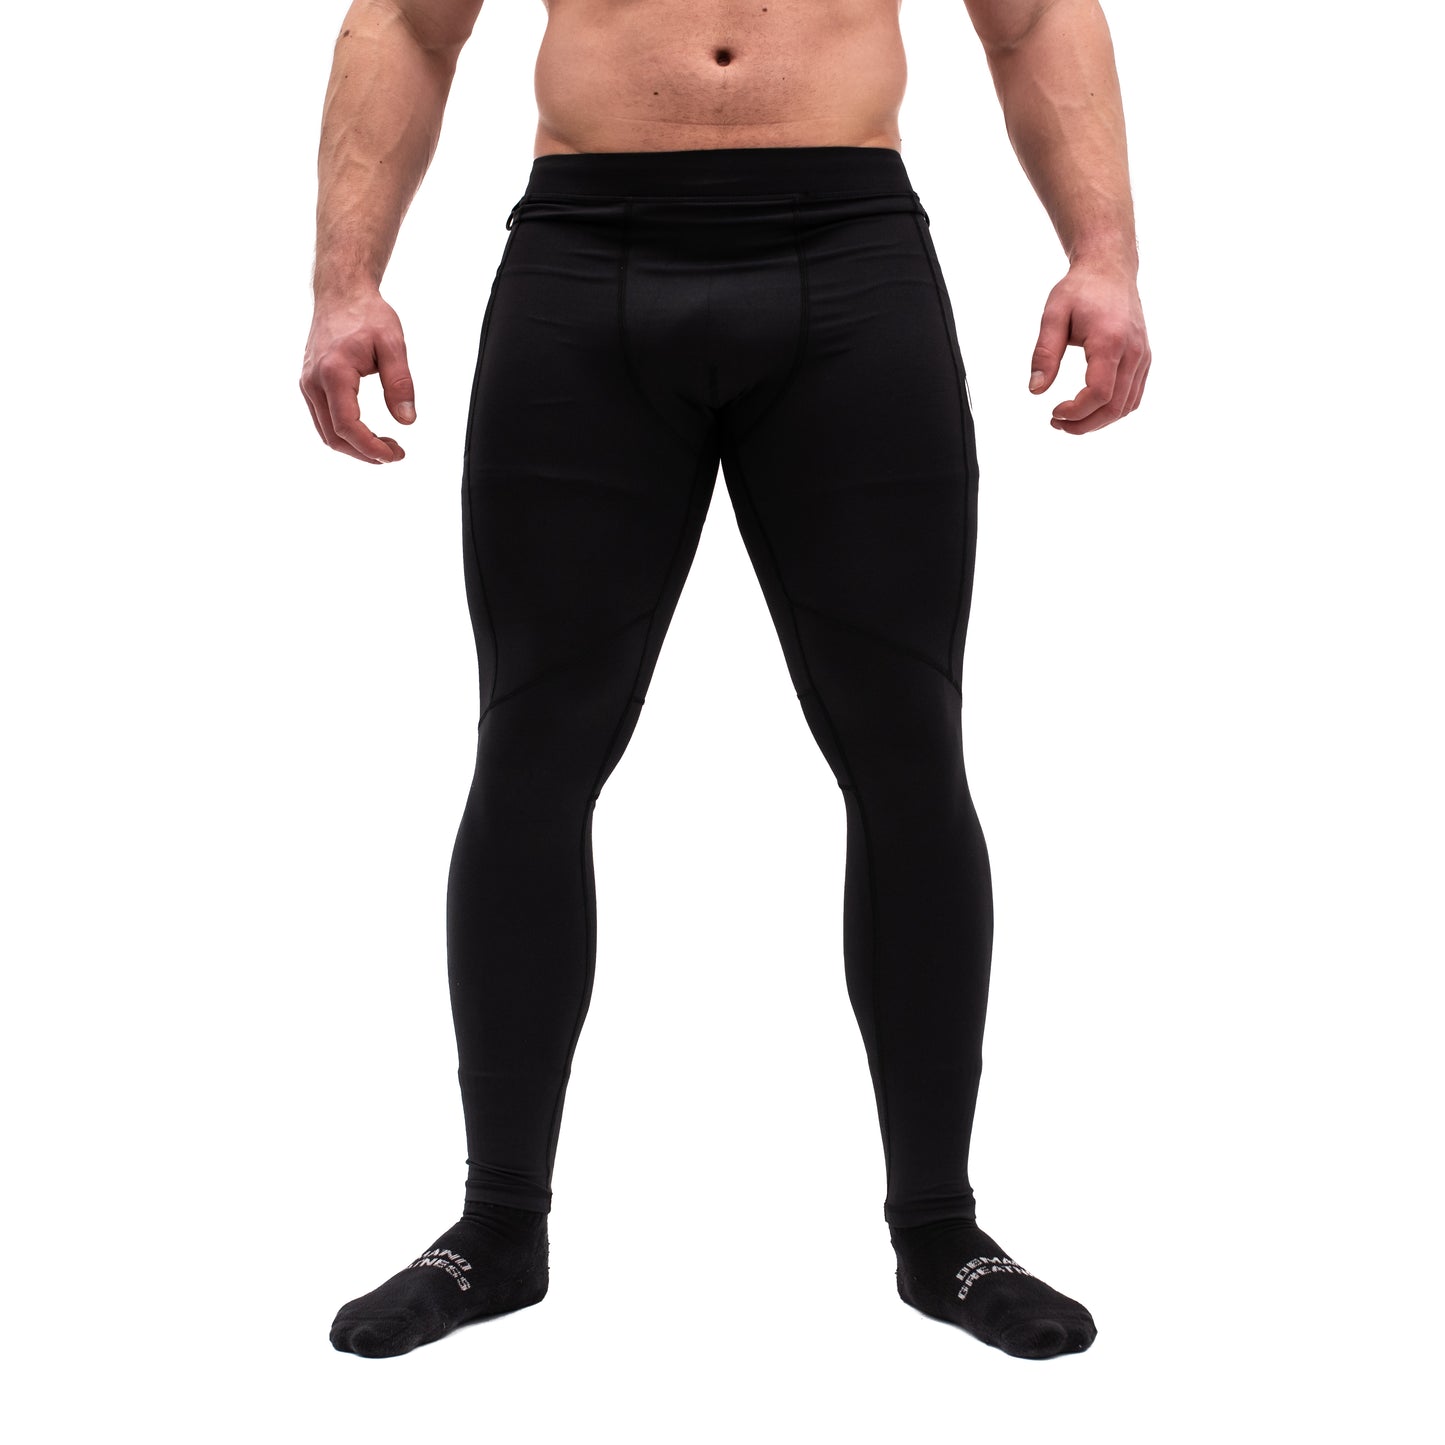 Men's Compression Training Shorts & Pants